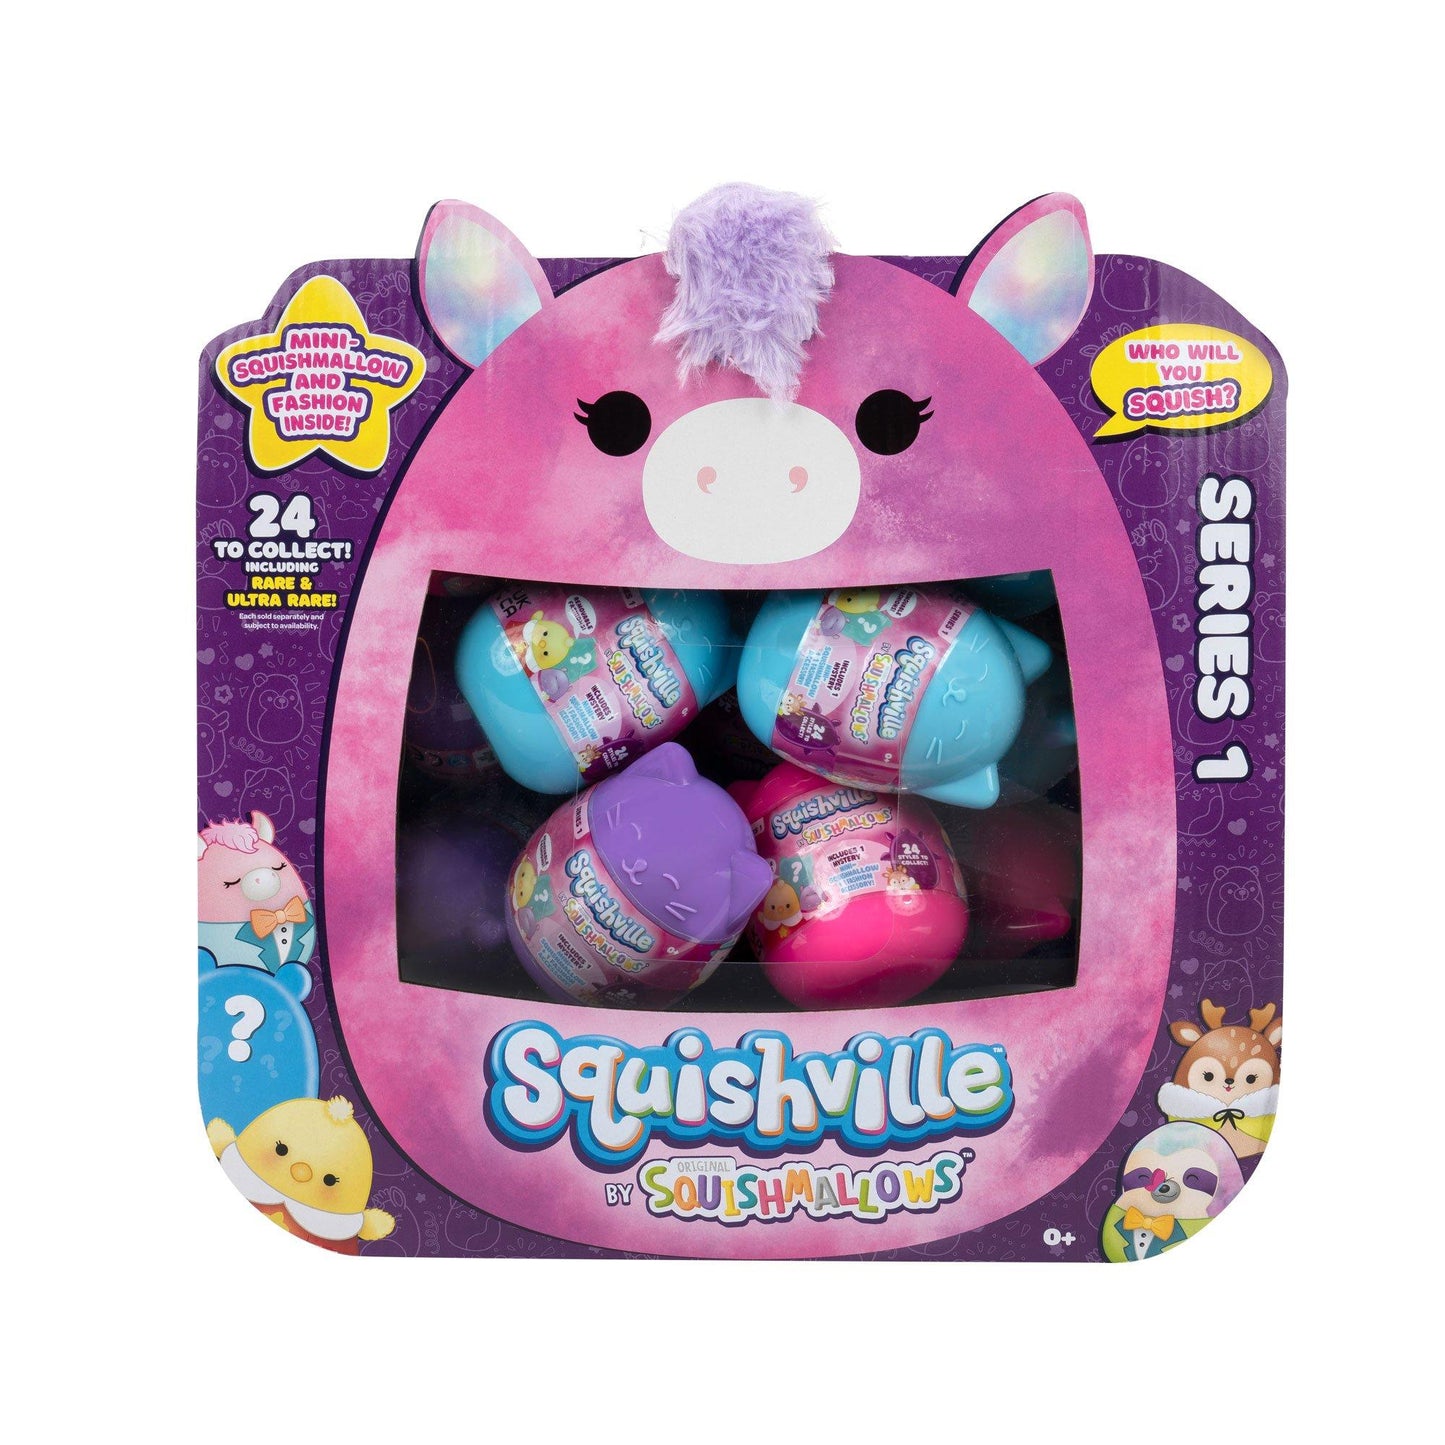 FULL UNOPENED BOX - (24) SERIES 1: Mystery Mini Squishmallow ~ Squishville Blind ~ LAST STOCK!